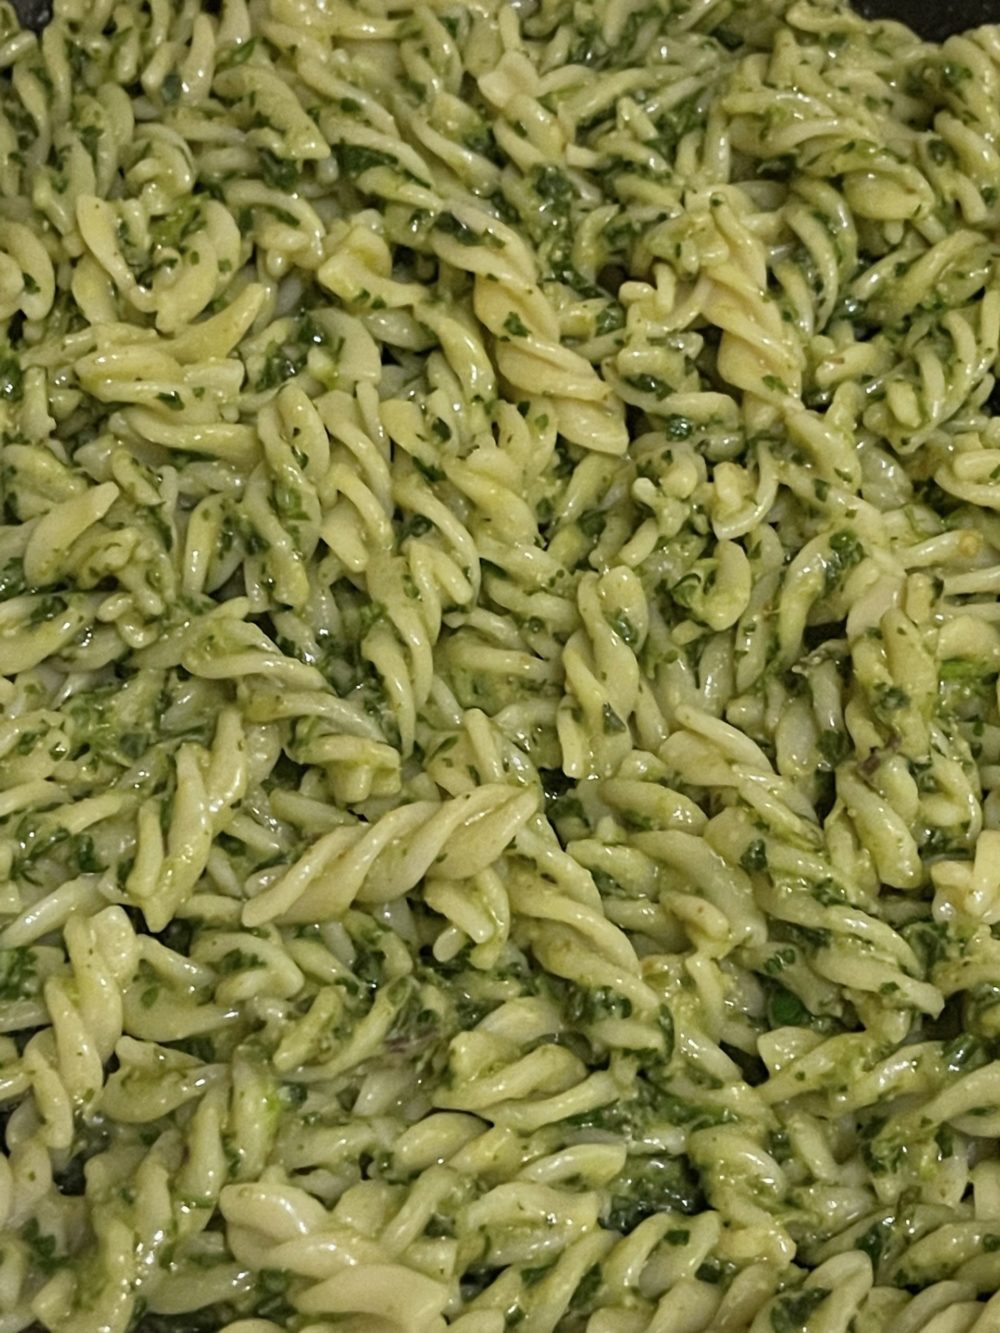 Spiral pasta with green pesto